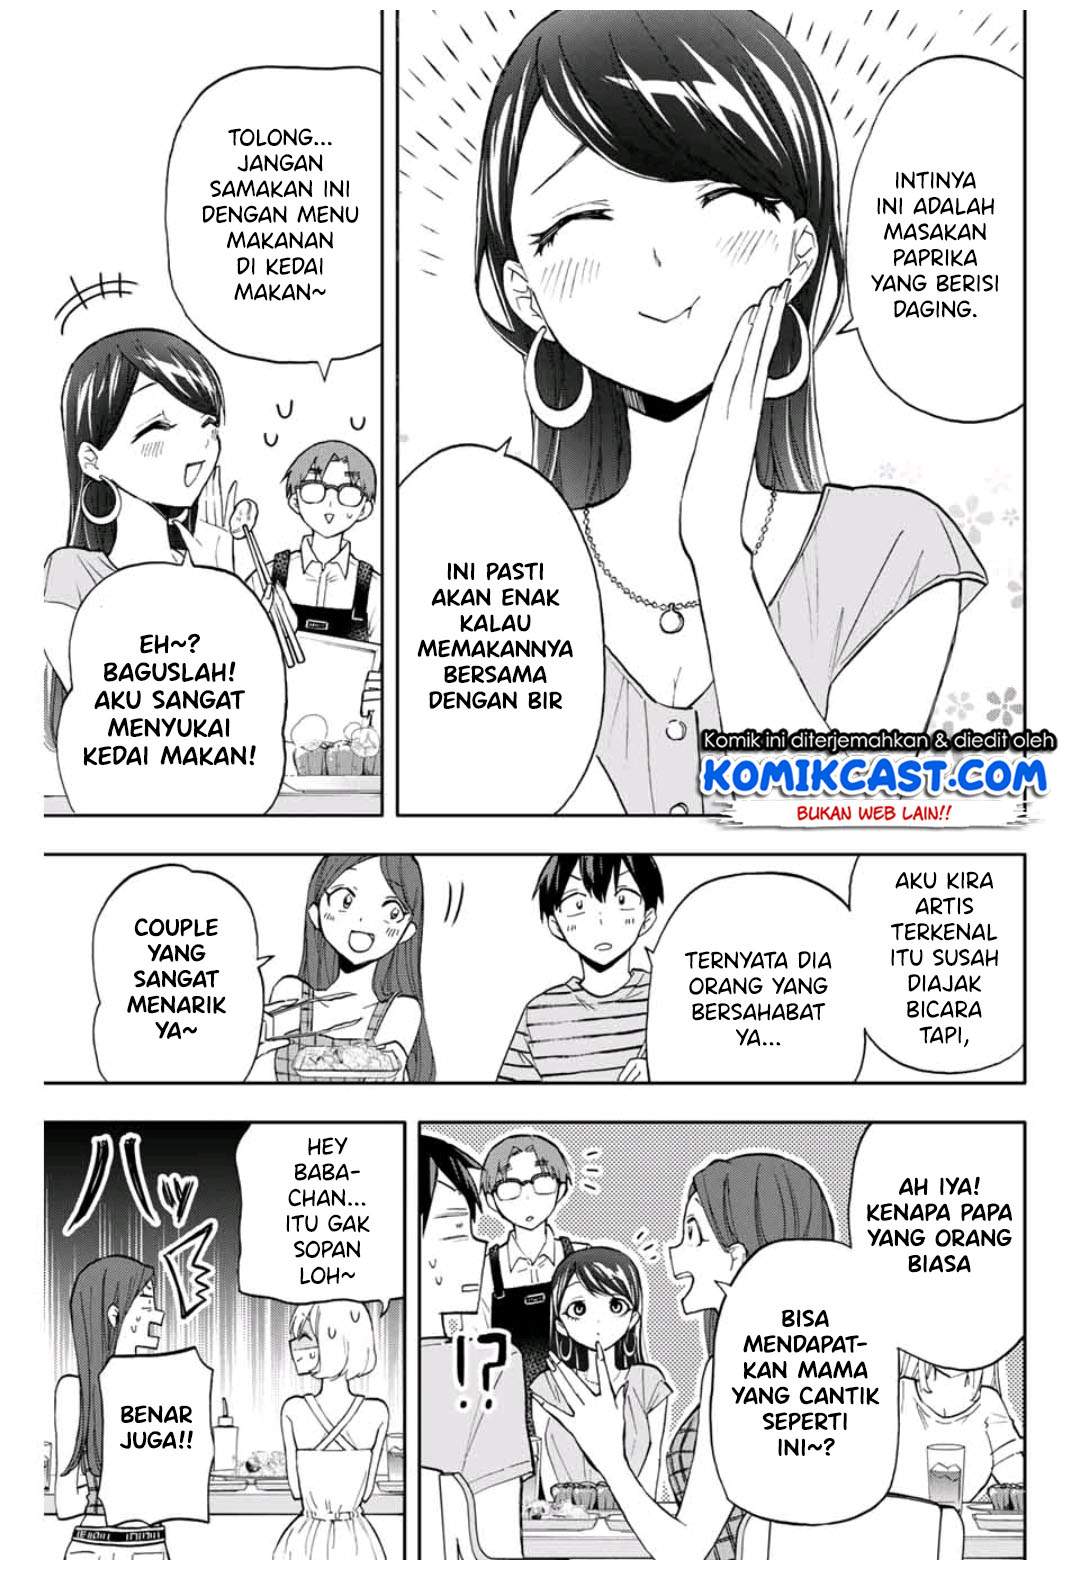 Hanazono Twins Chapter 13 Bahasa Indonesia